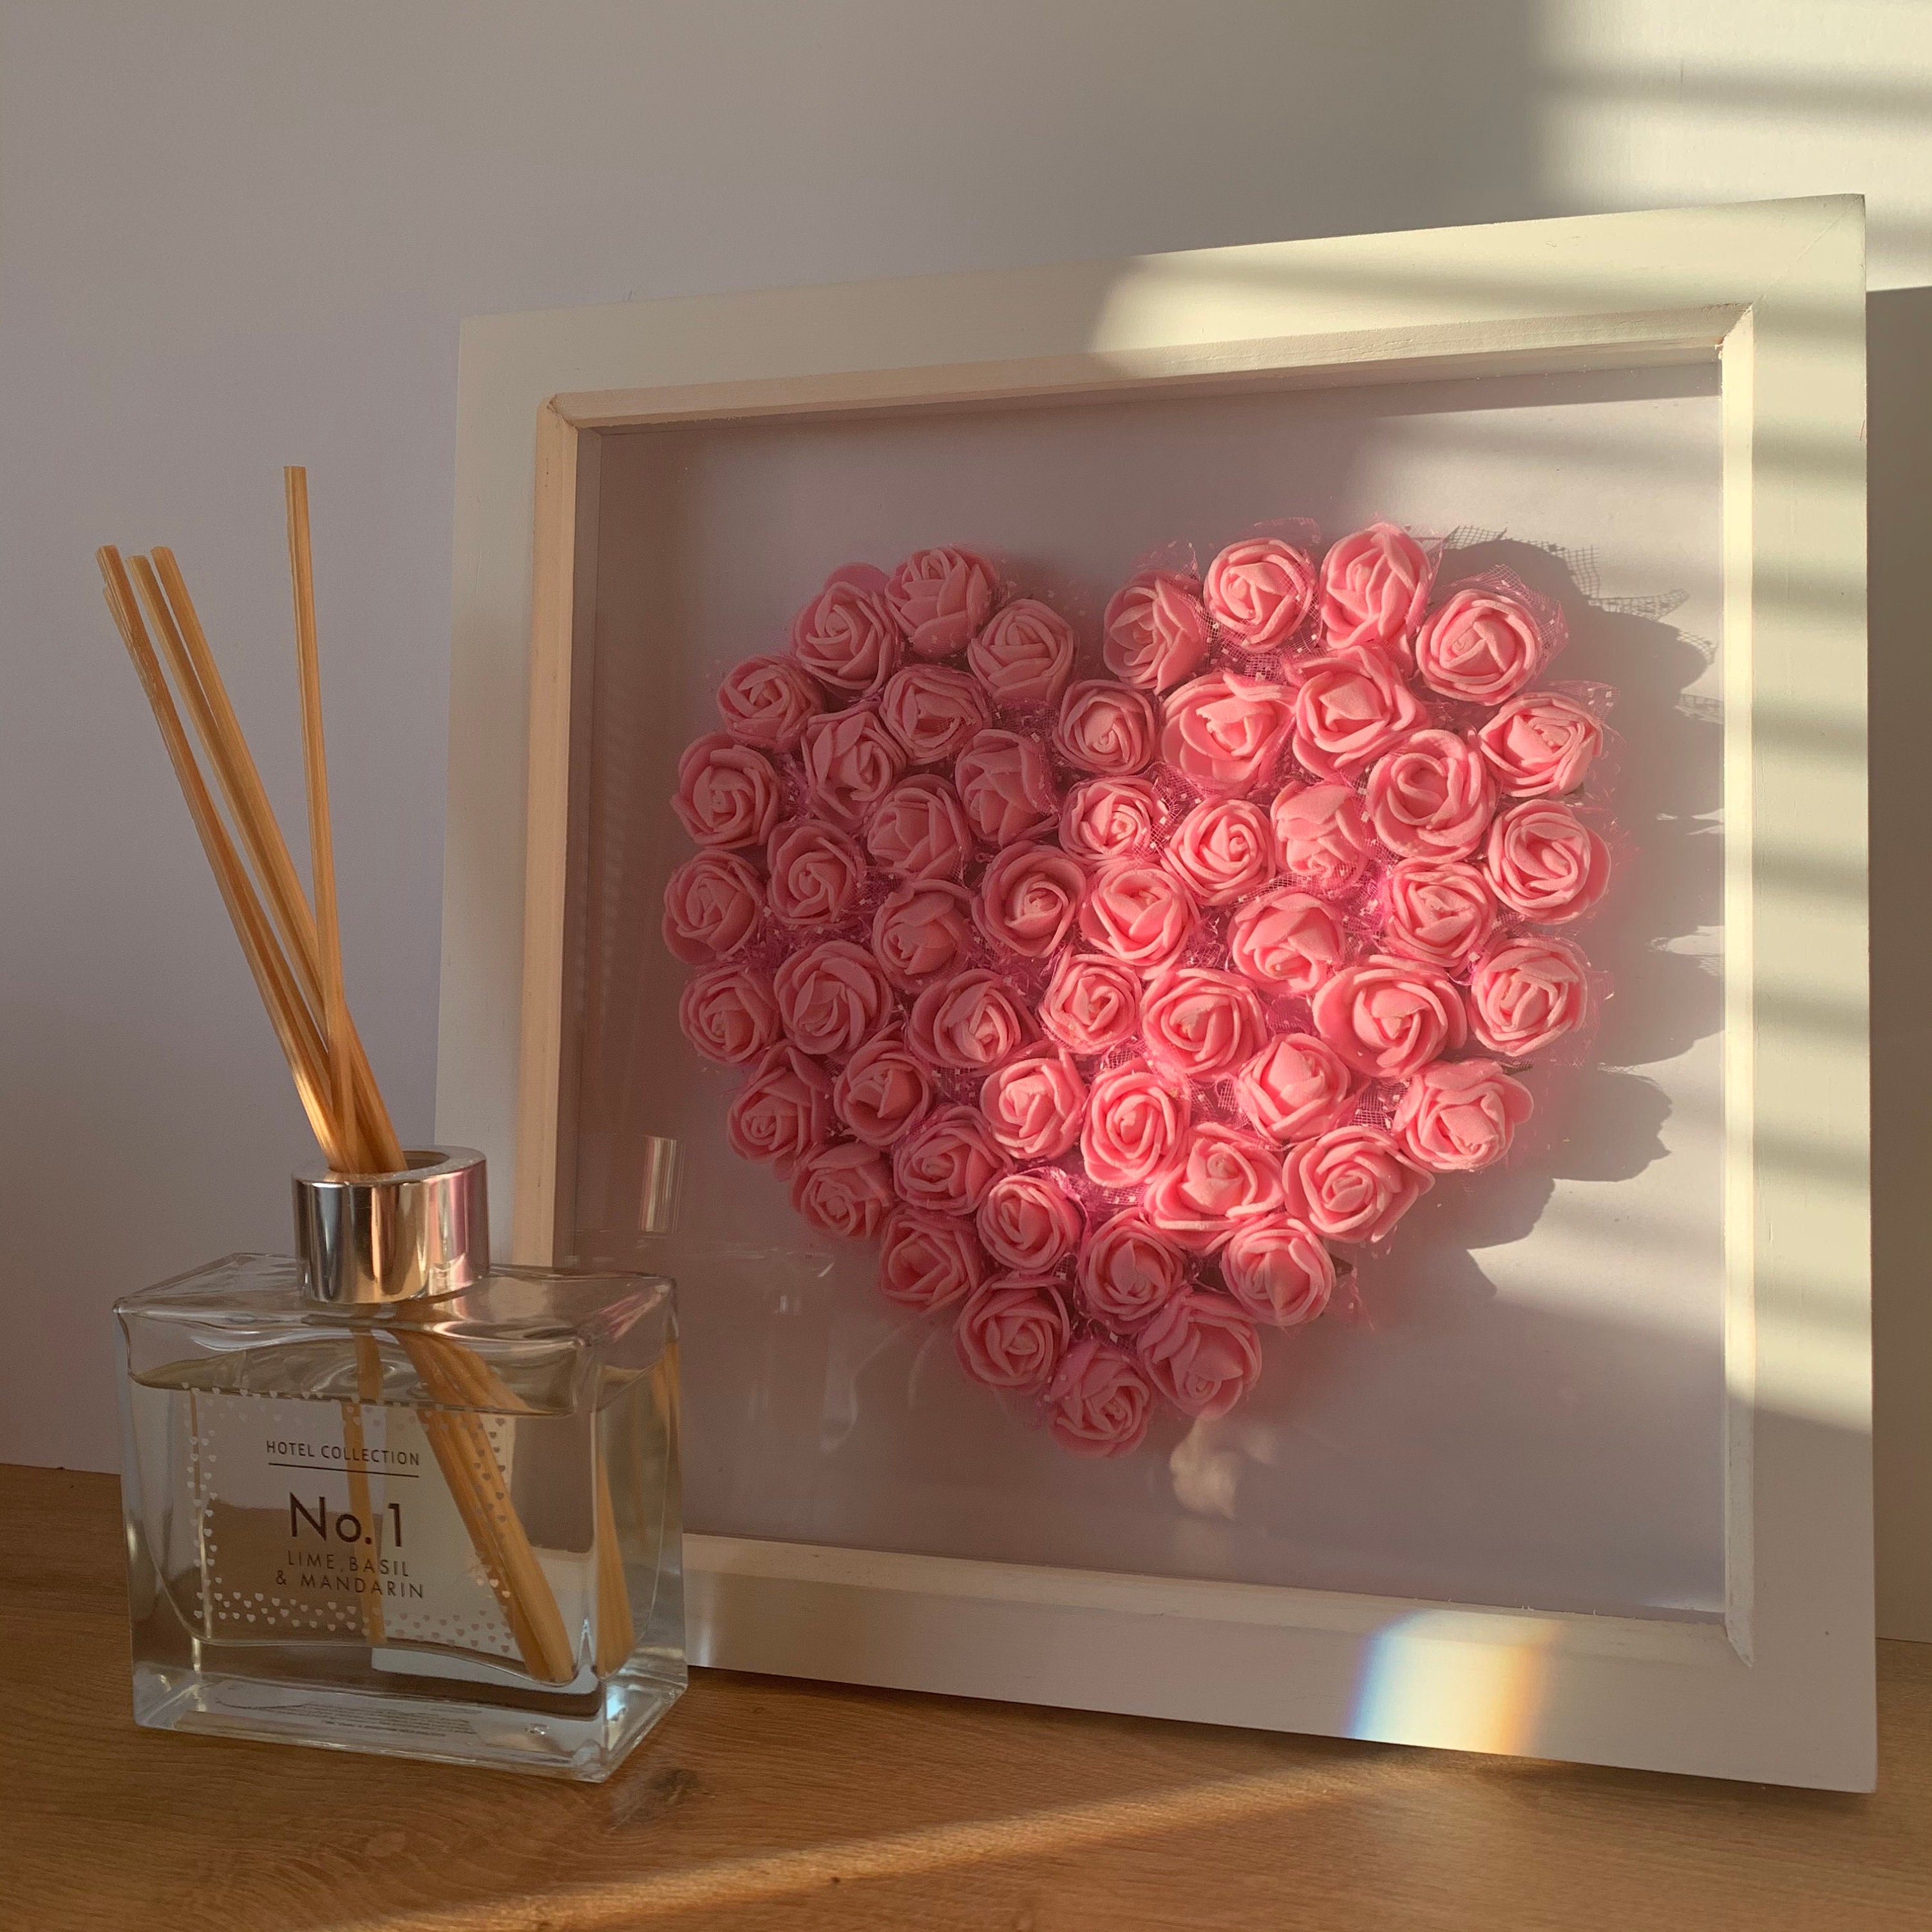 Foam Rose Flower Heart Frame Home Decor Perfect for Any Etsy